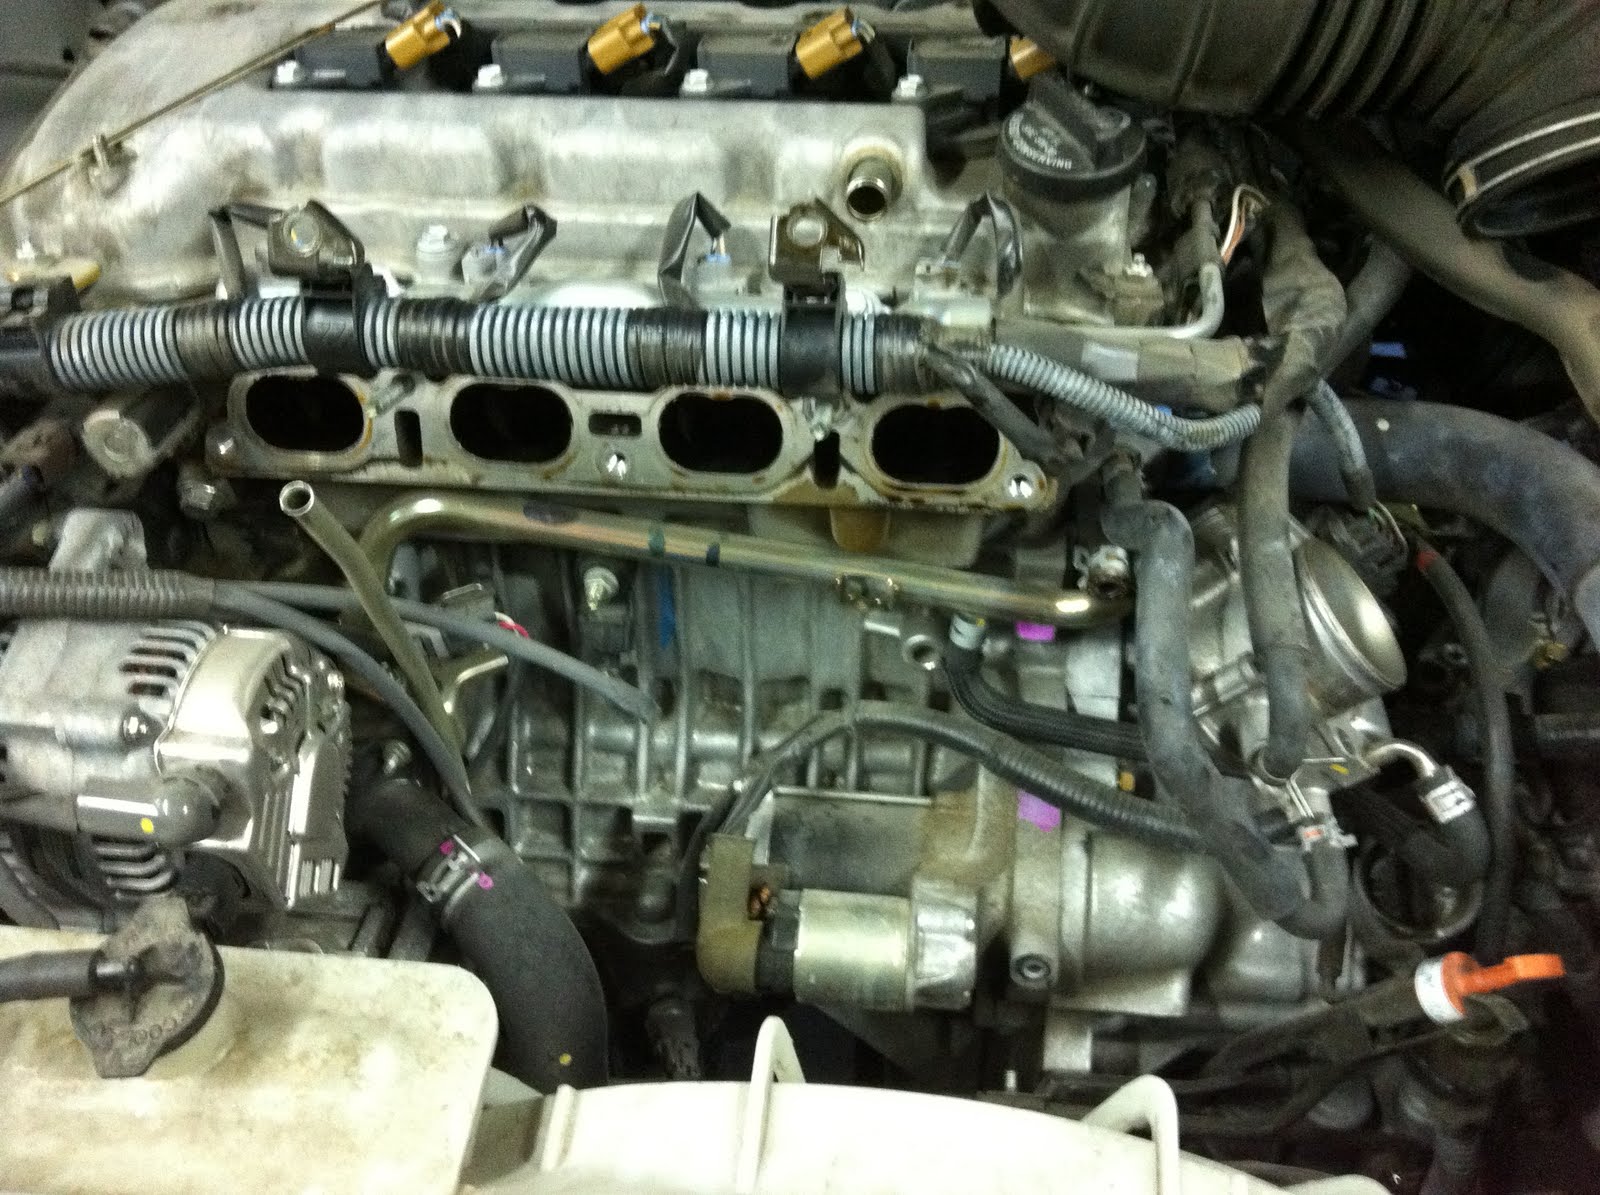 2005 Toyota corolla engine code p0171